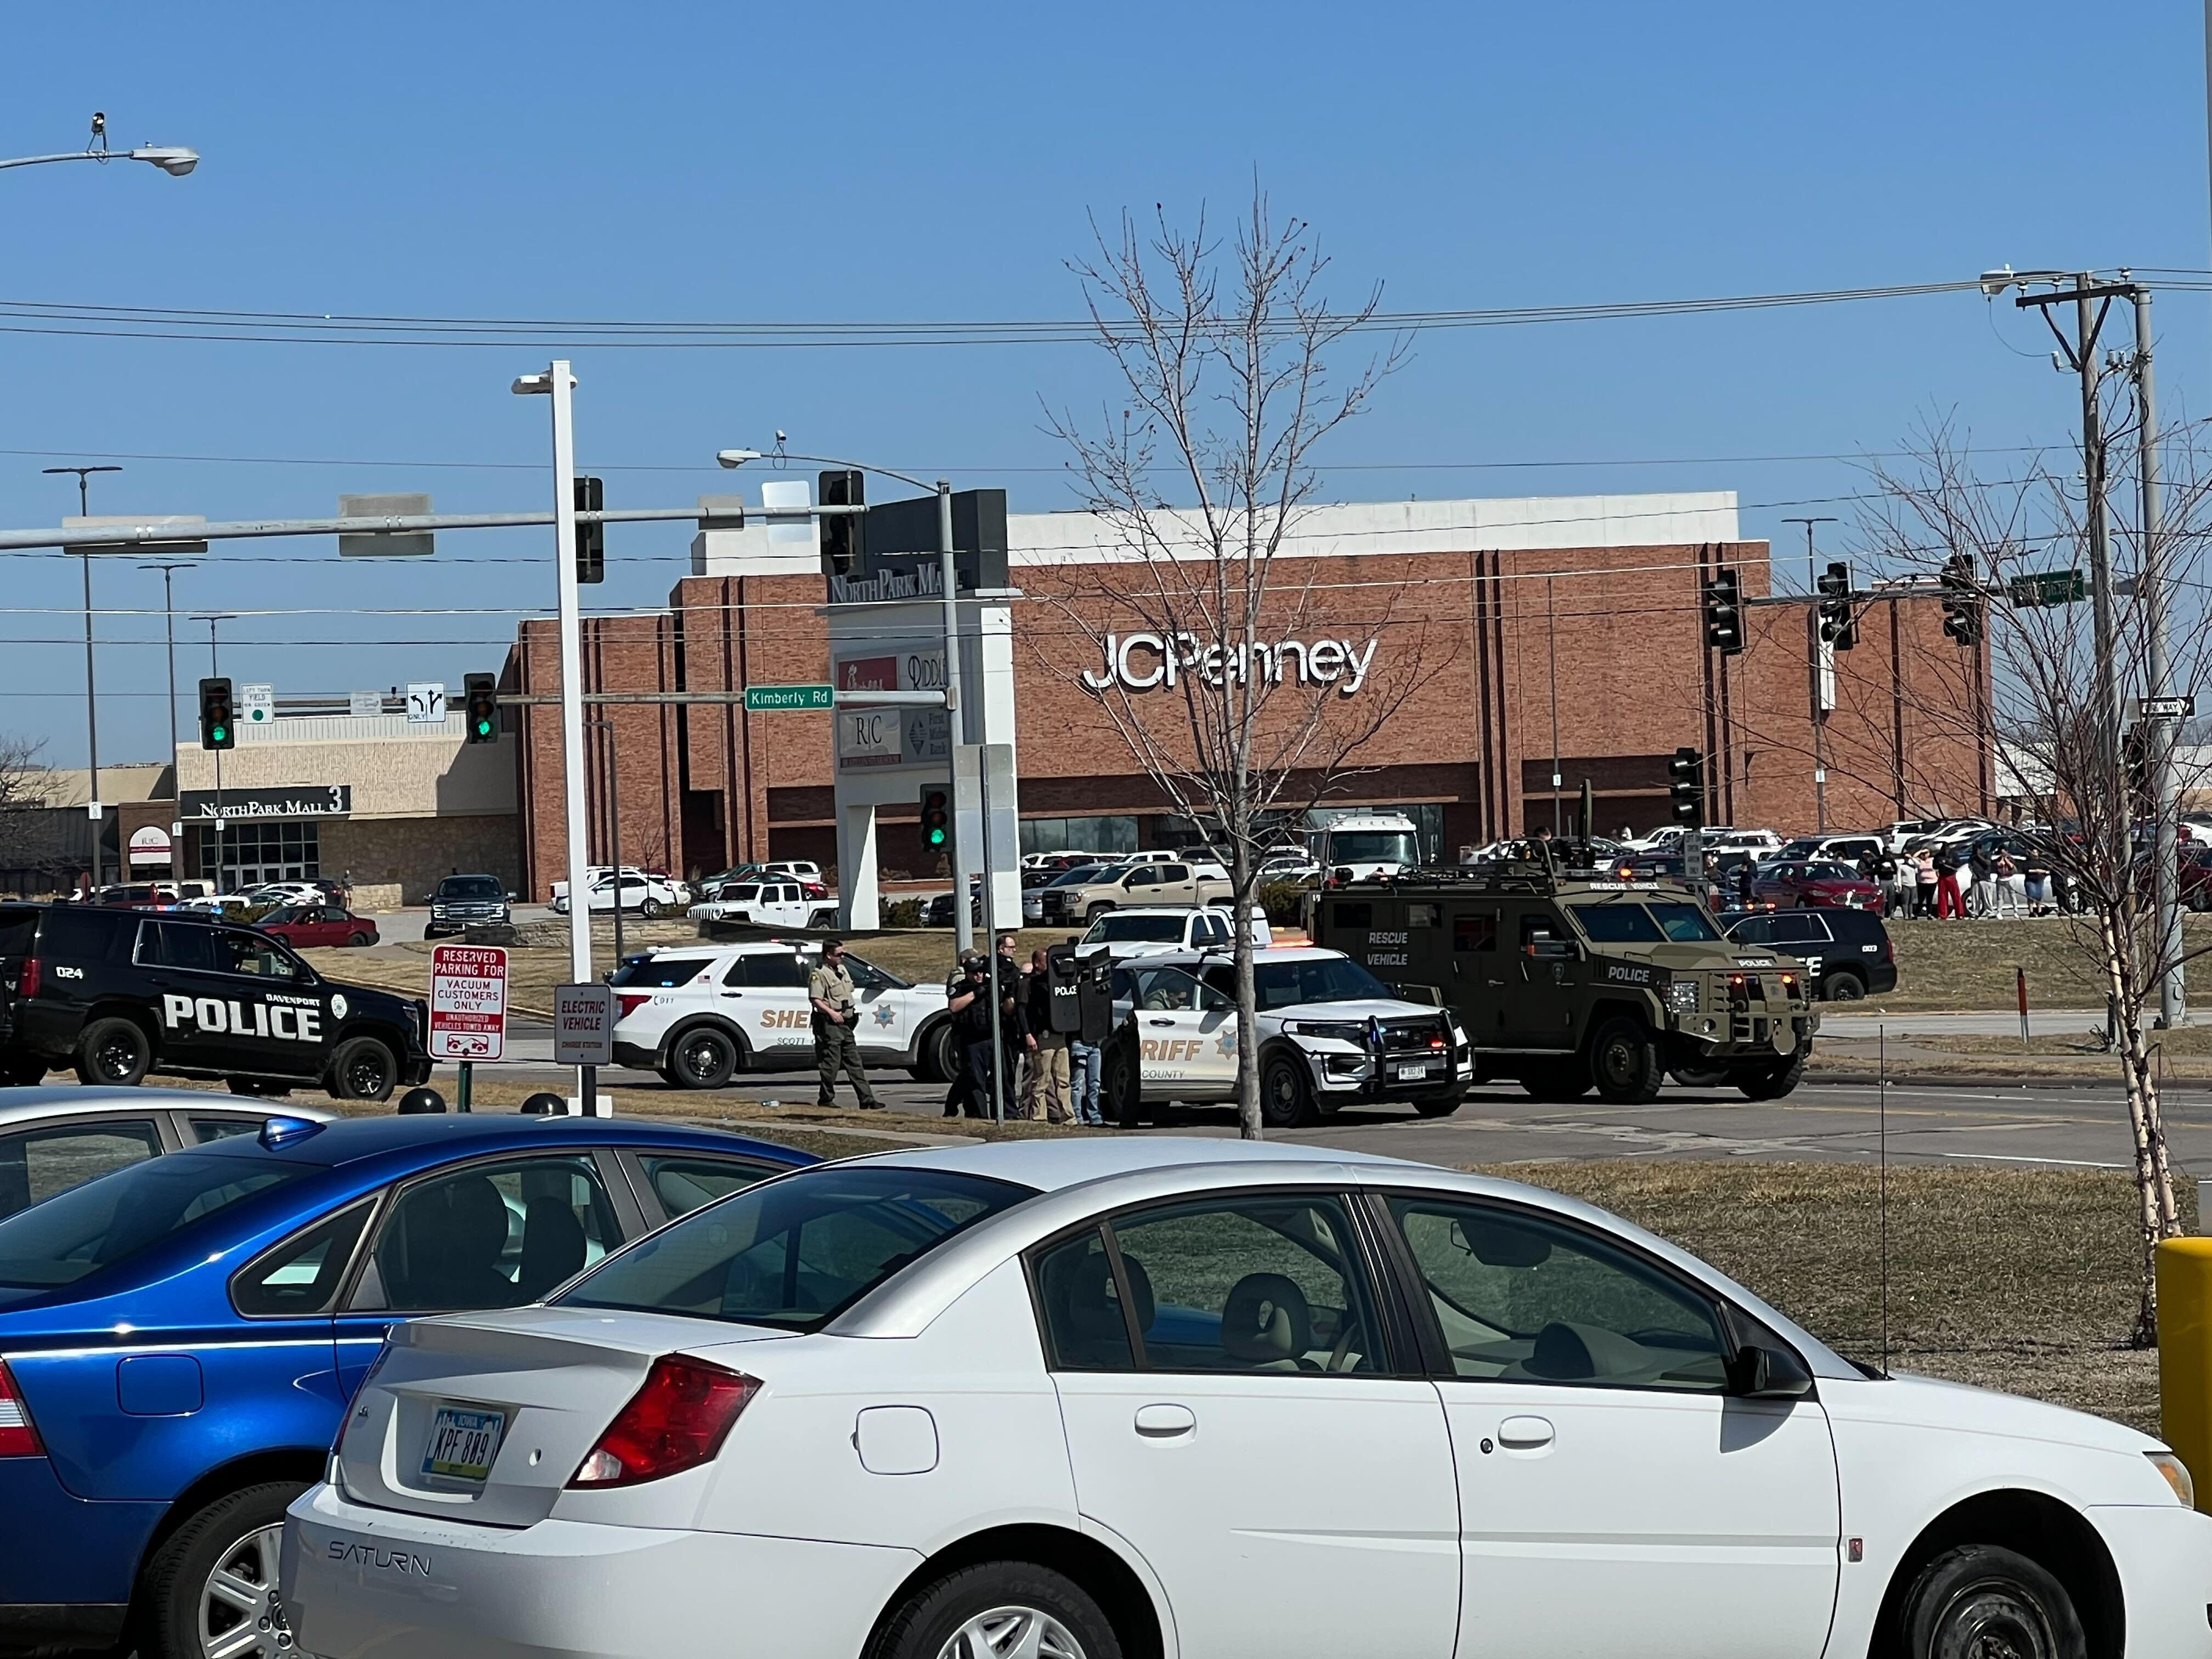 NorthPark Mall Shooting Leaves 2 Hurt